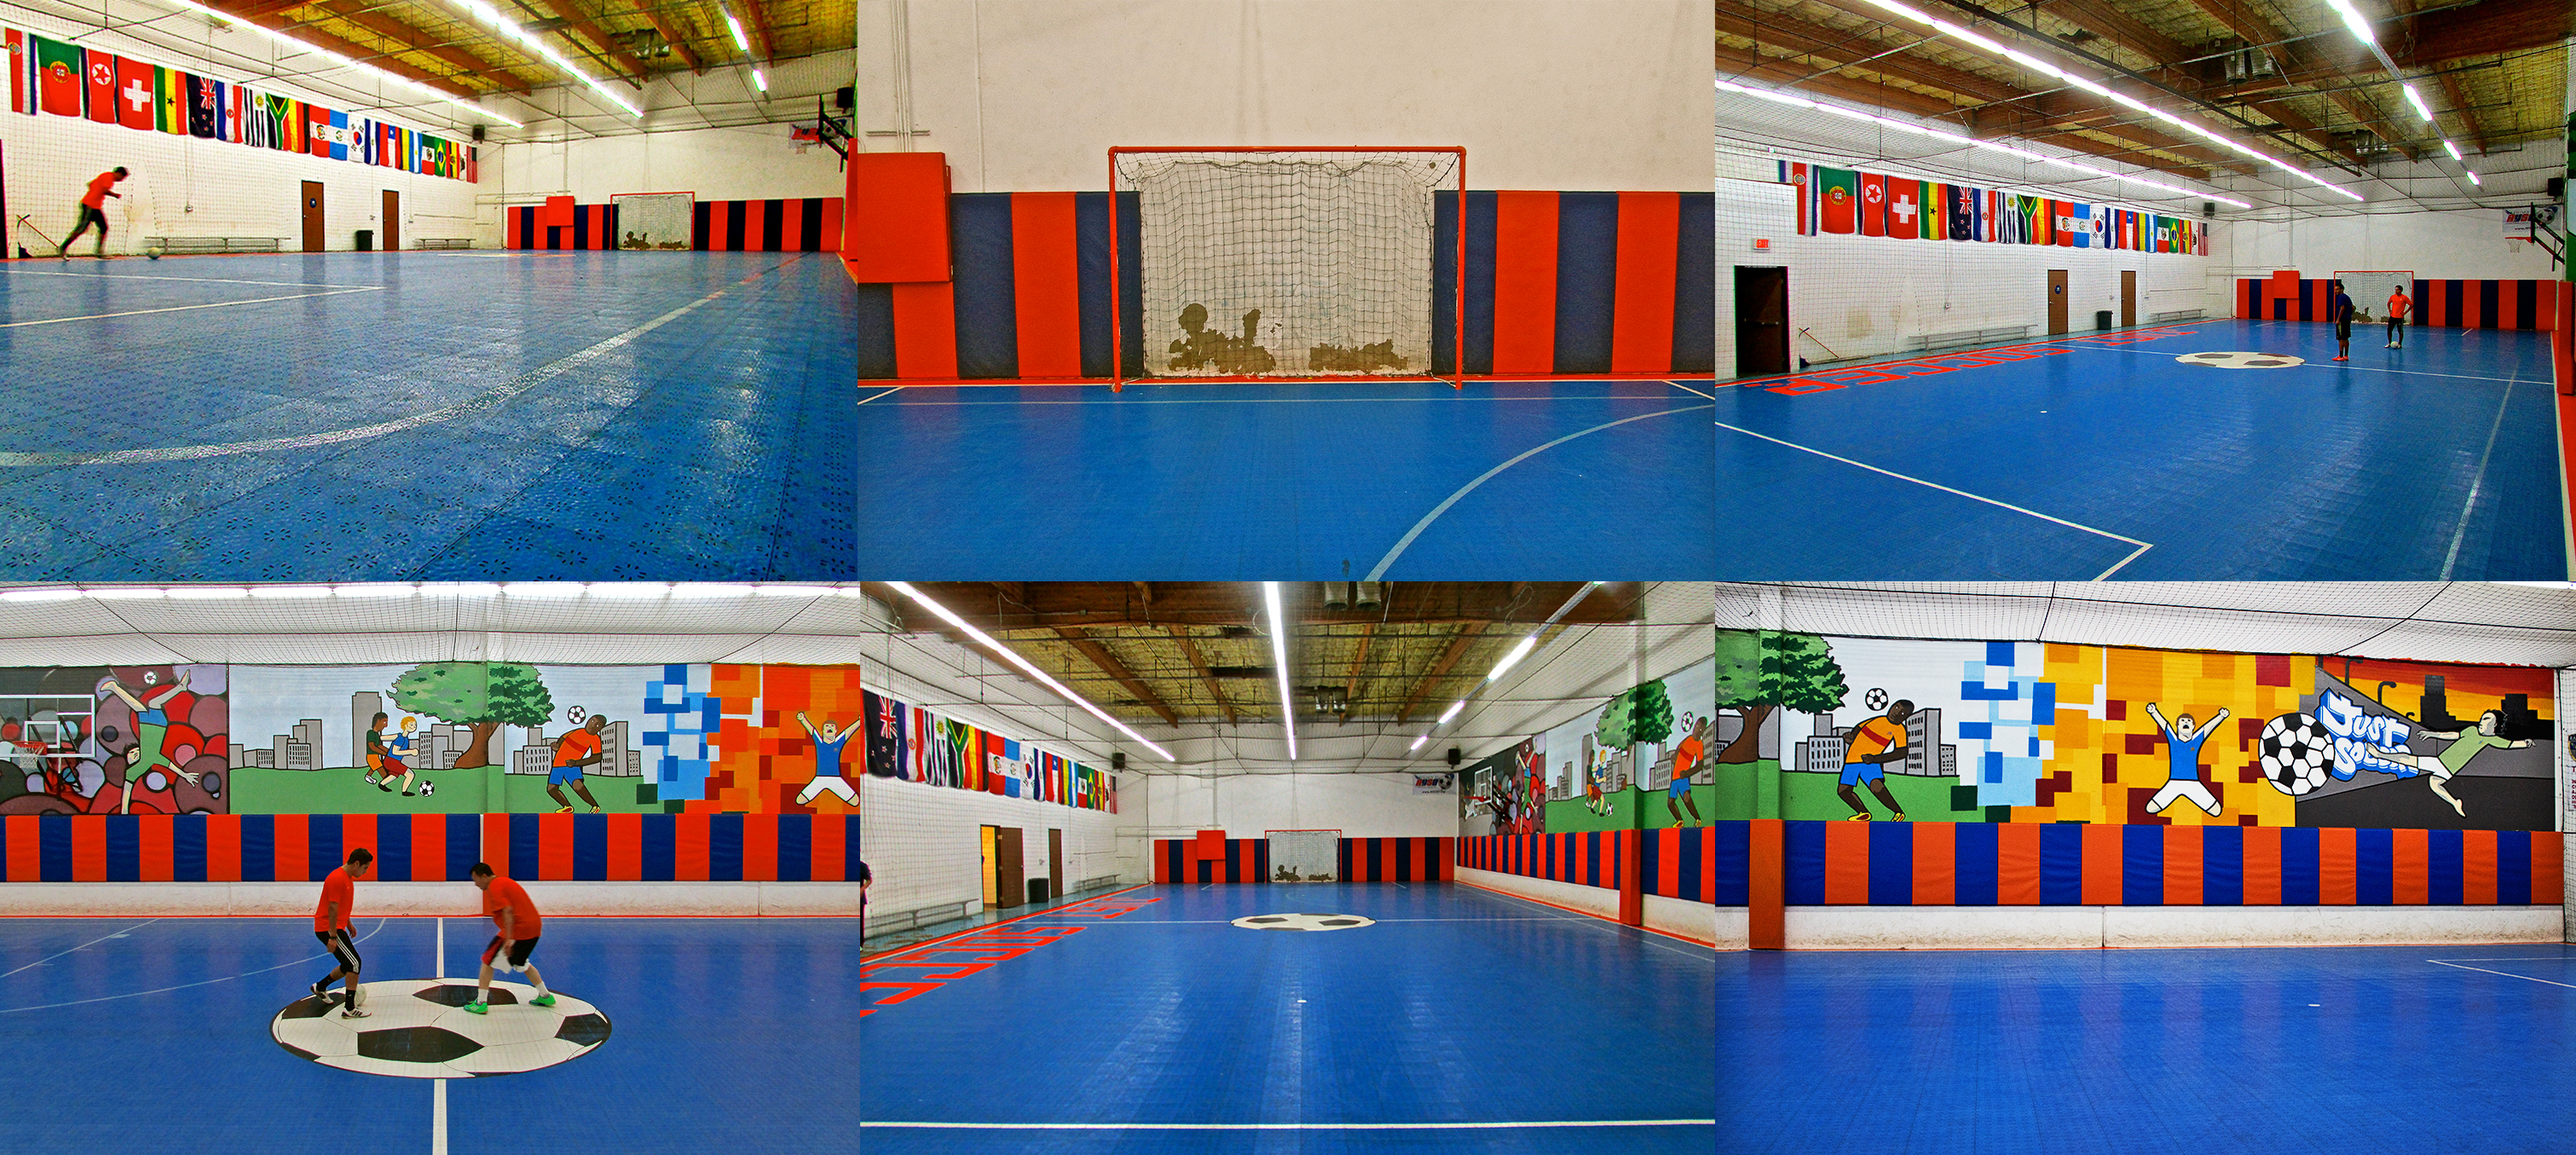 Youth Soccer News: Just Soccer Futsal Center Grows Futsal in Riverside